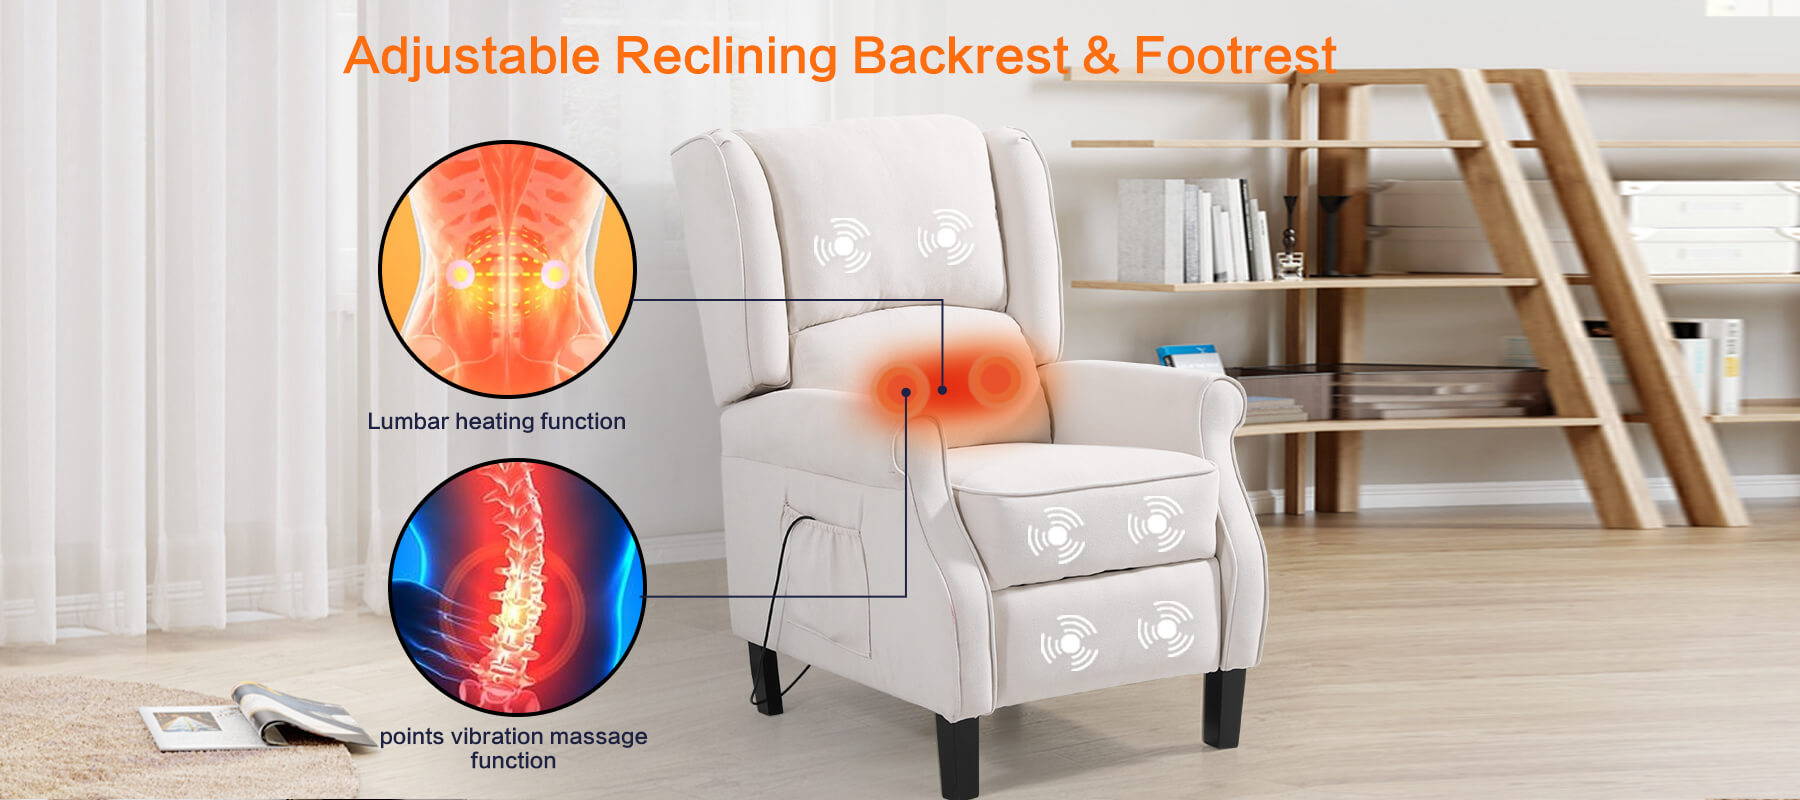 Asjmreye Wingback Recliner Chair,Heating and Vibrating Massage